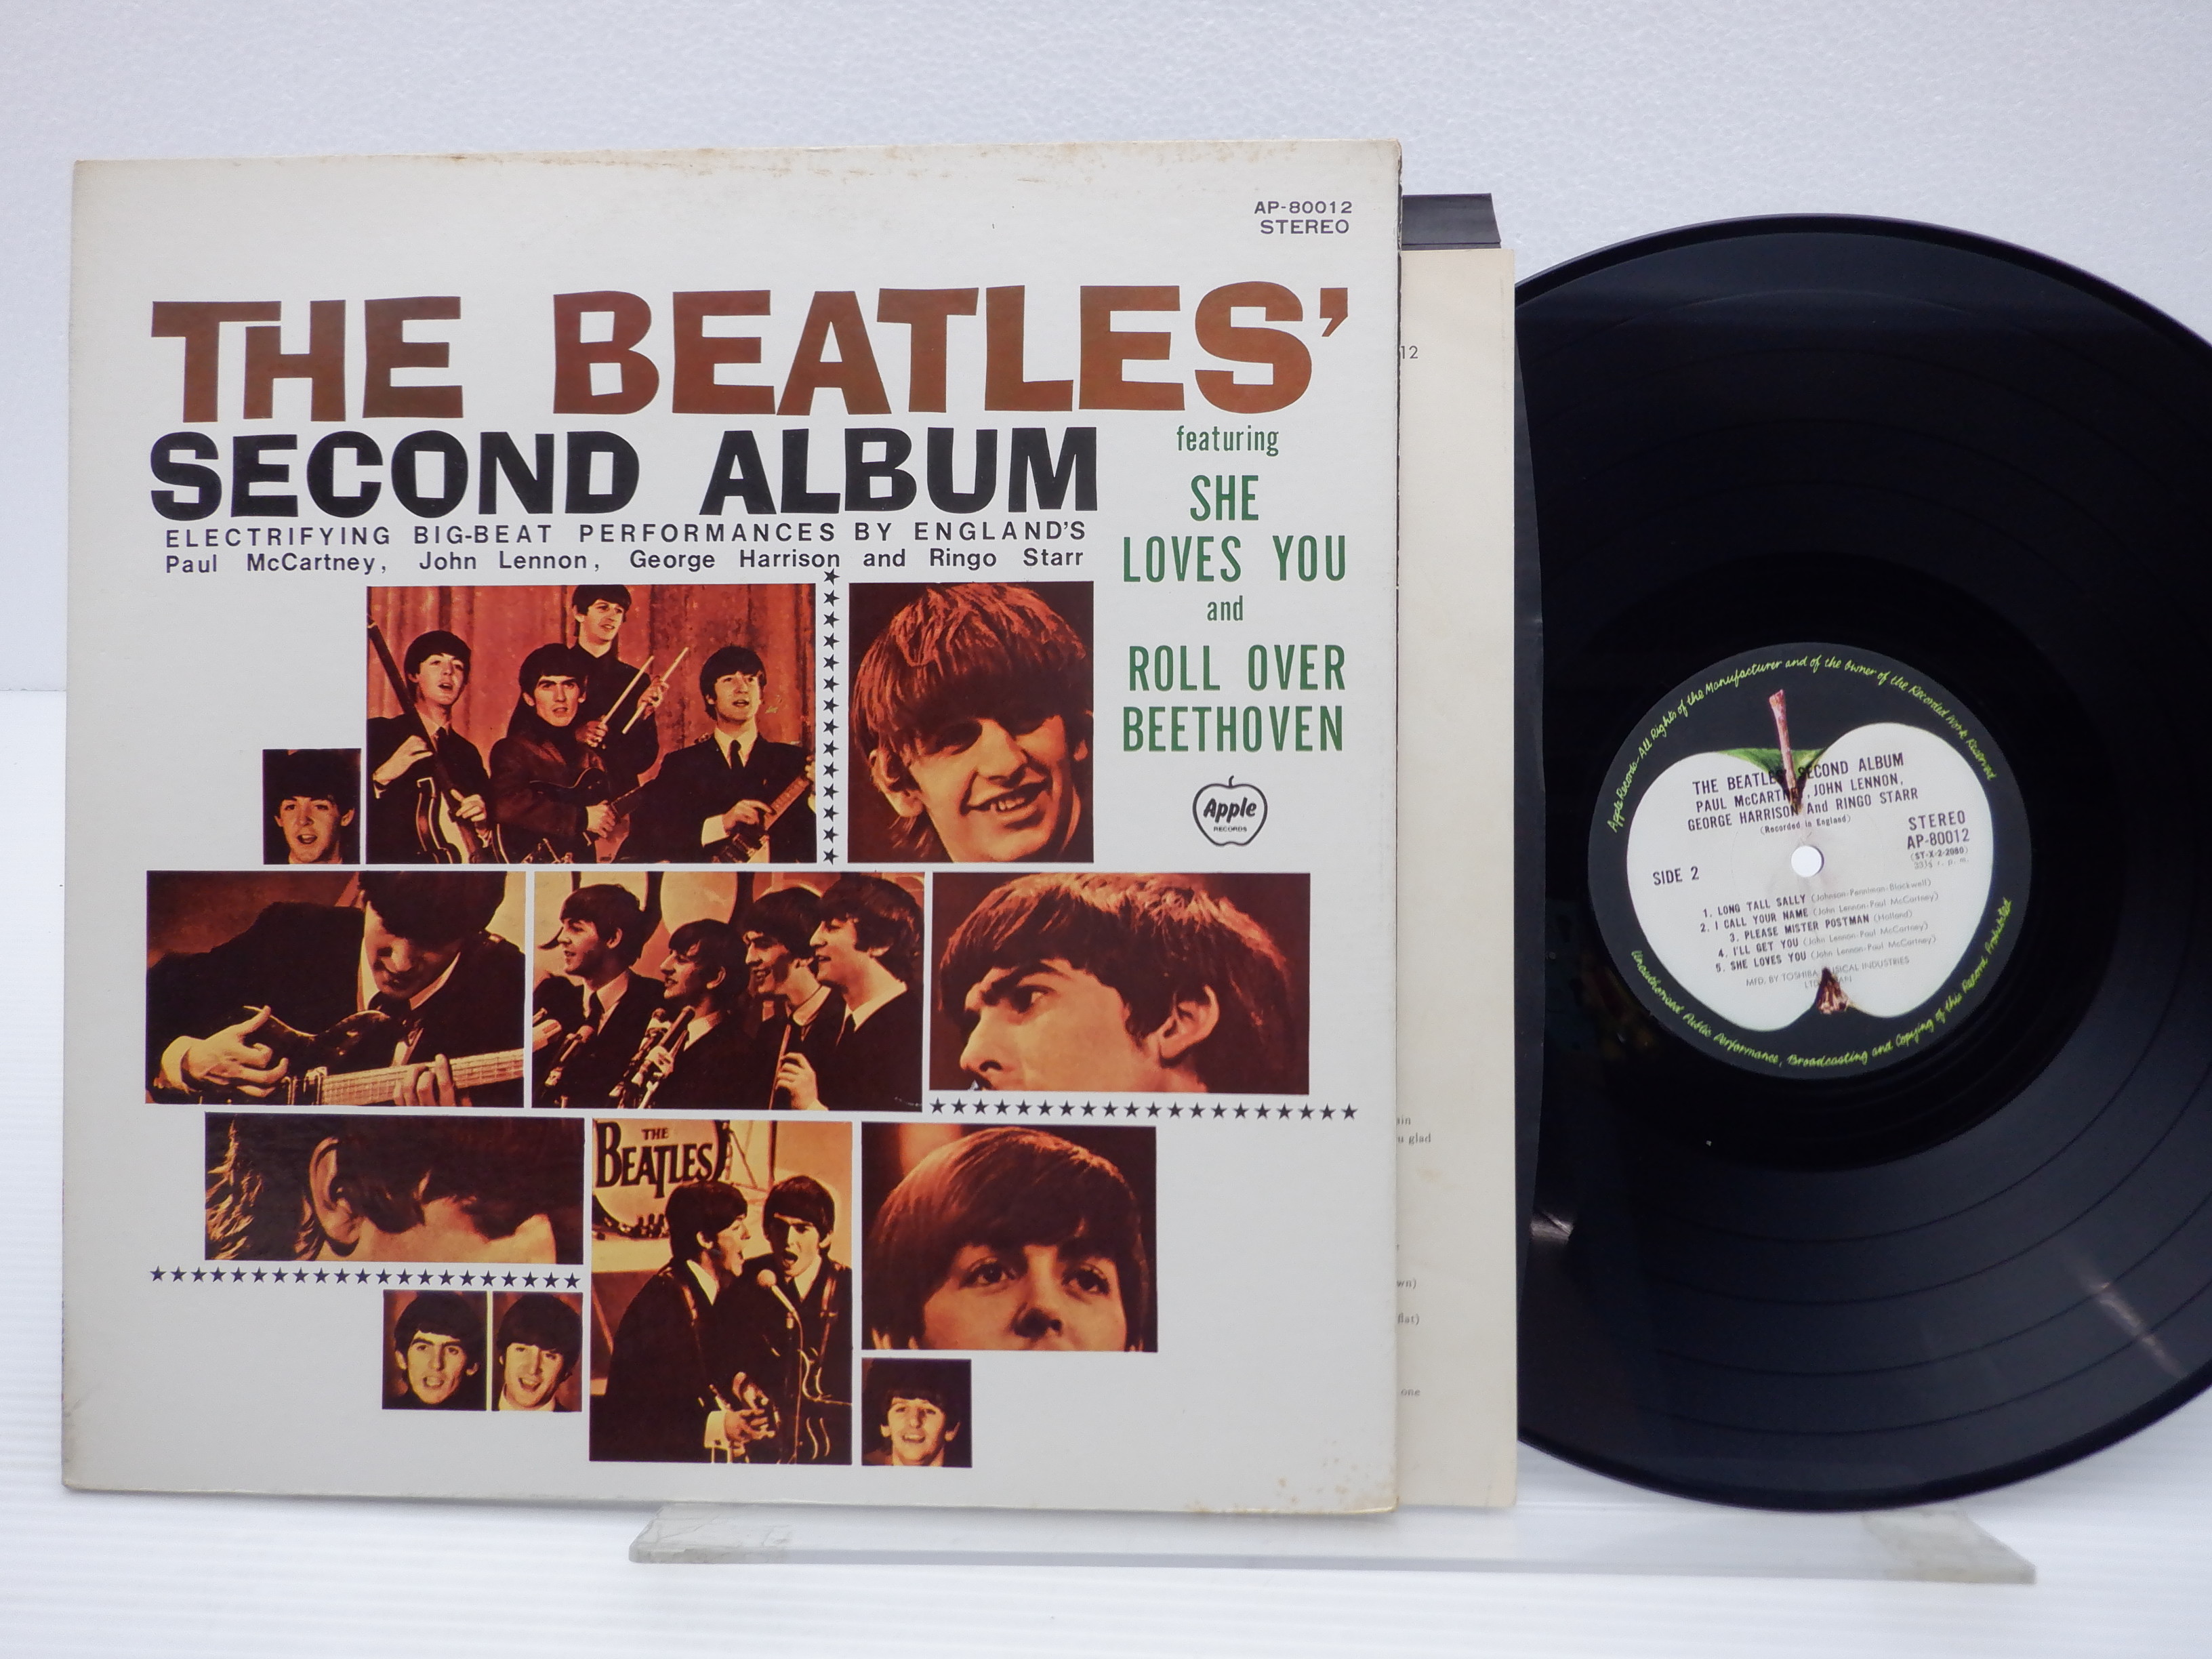 The Beatles(ビートルズ)「The Beatles' Second Album(ザ・ビートルズ